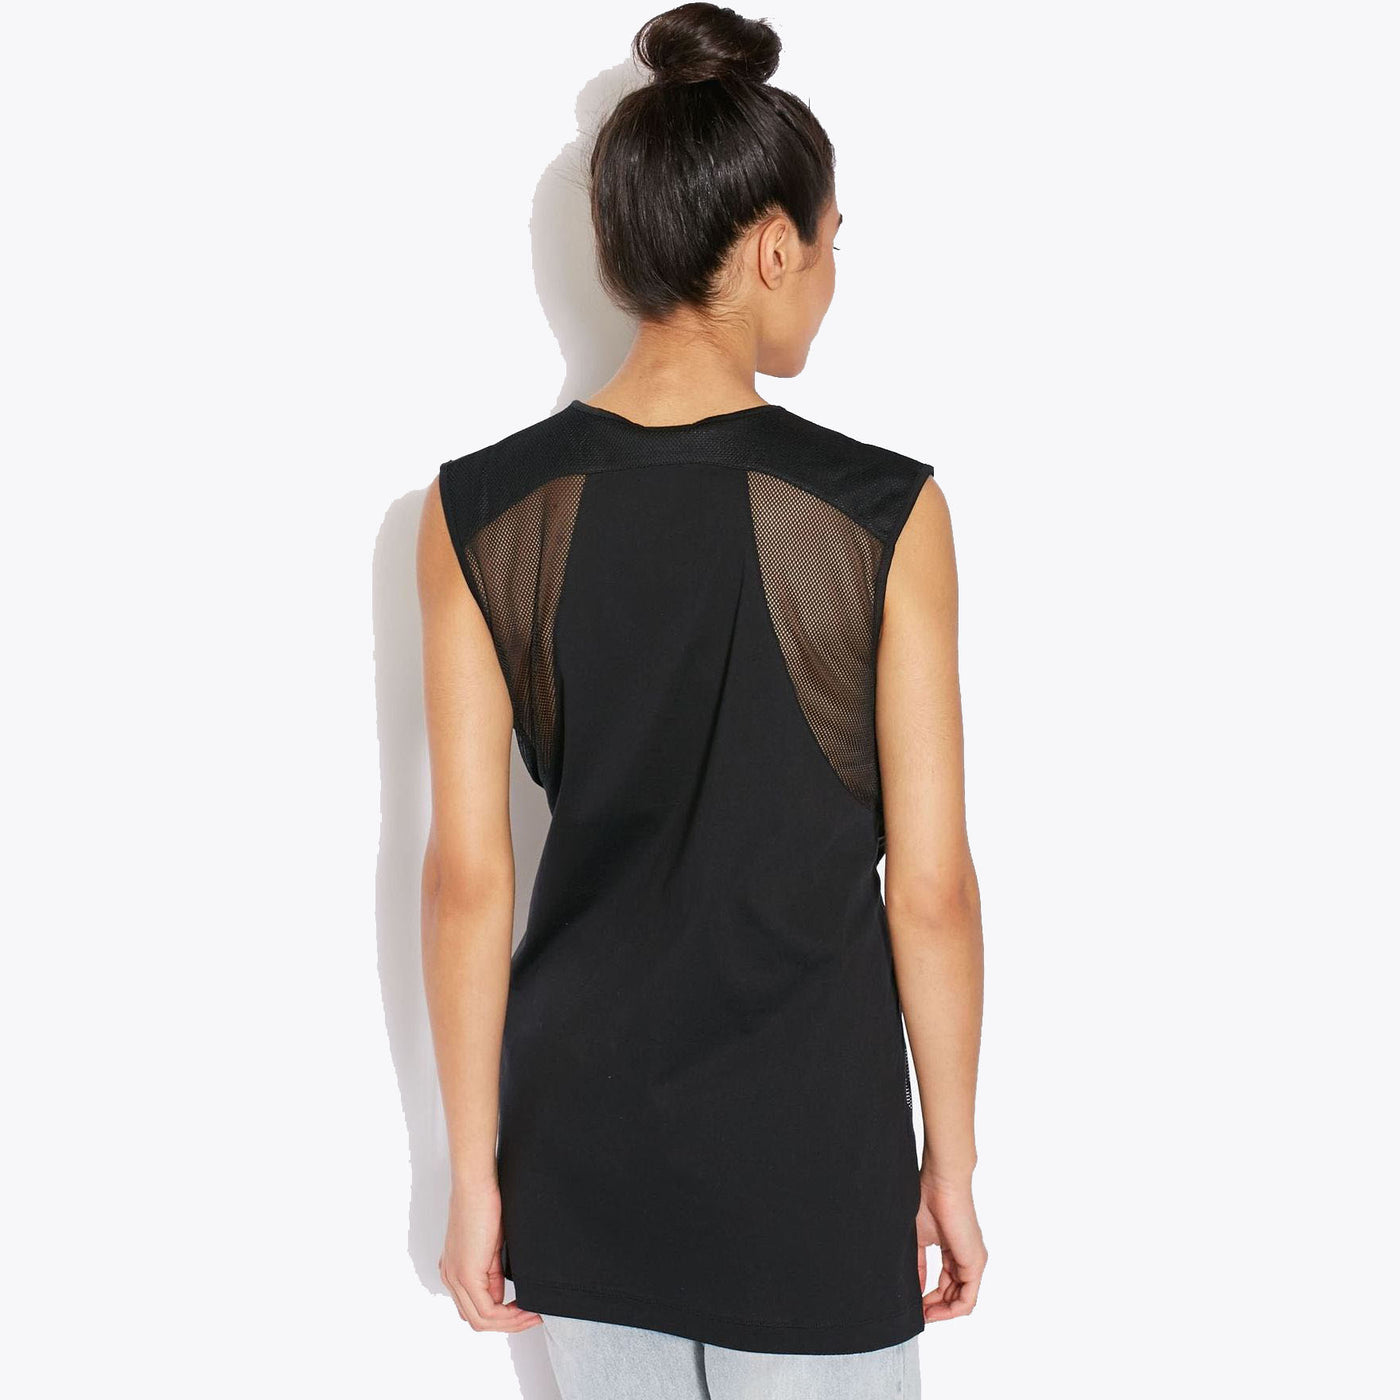 Women Nike T-Shirt Sleeveless Bonded Top Black